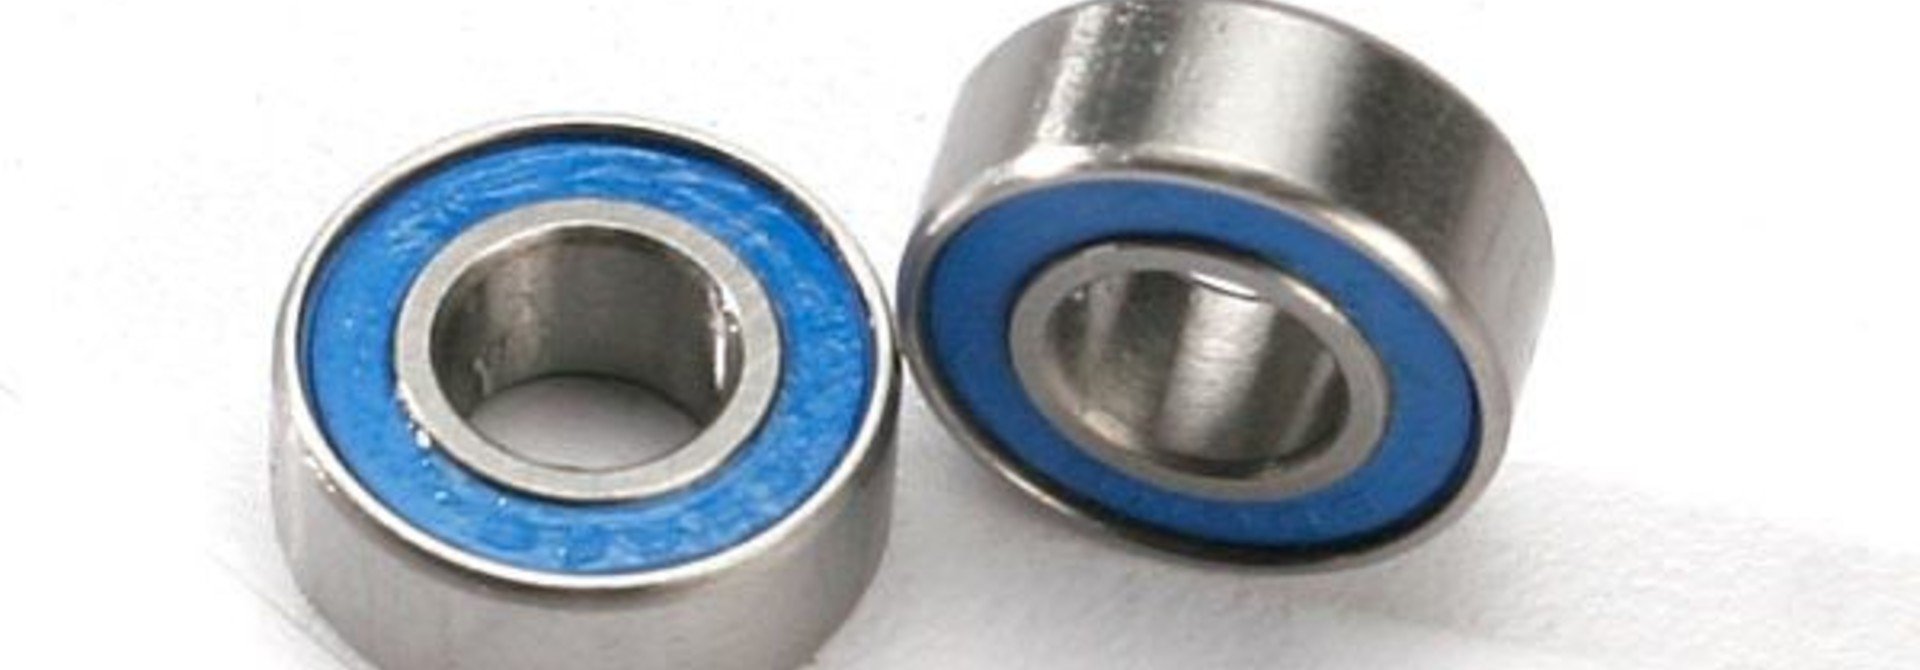 Ball bearings, blue rubber sealed (6x13x5mm) (2), TRX5180